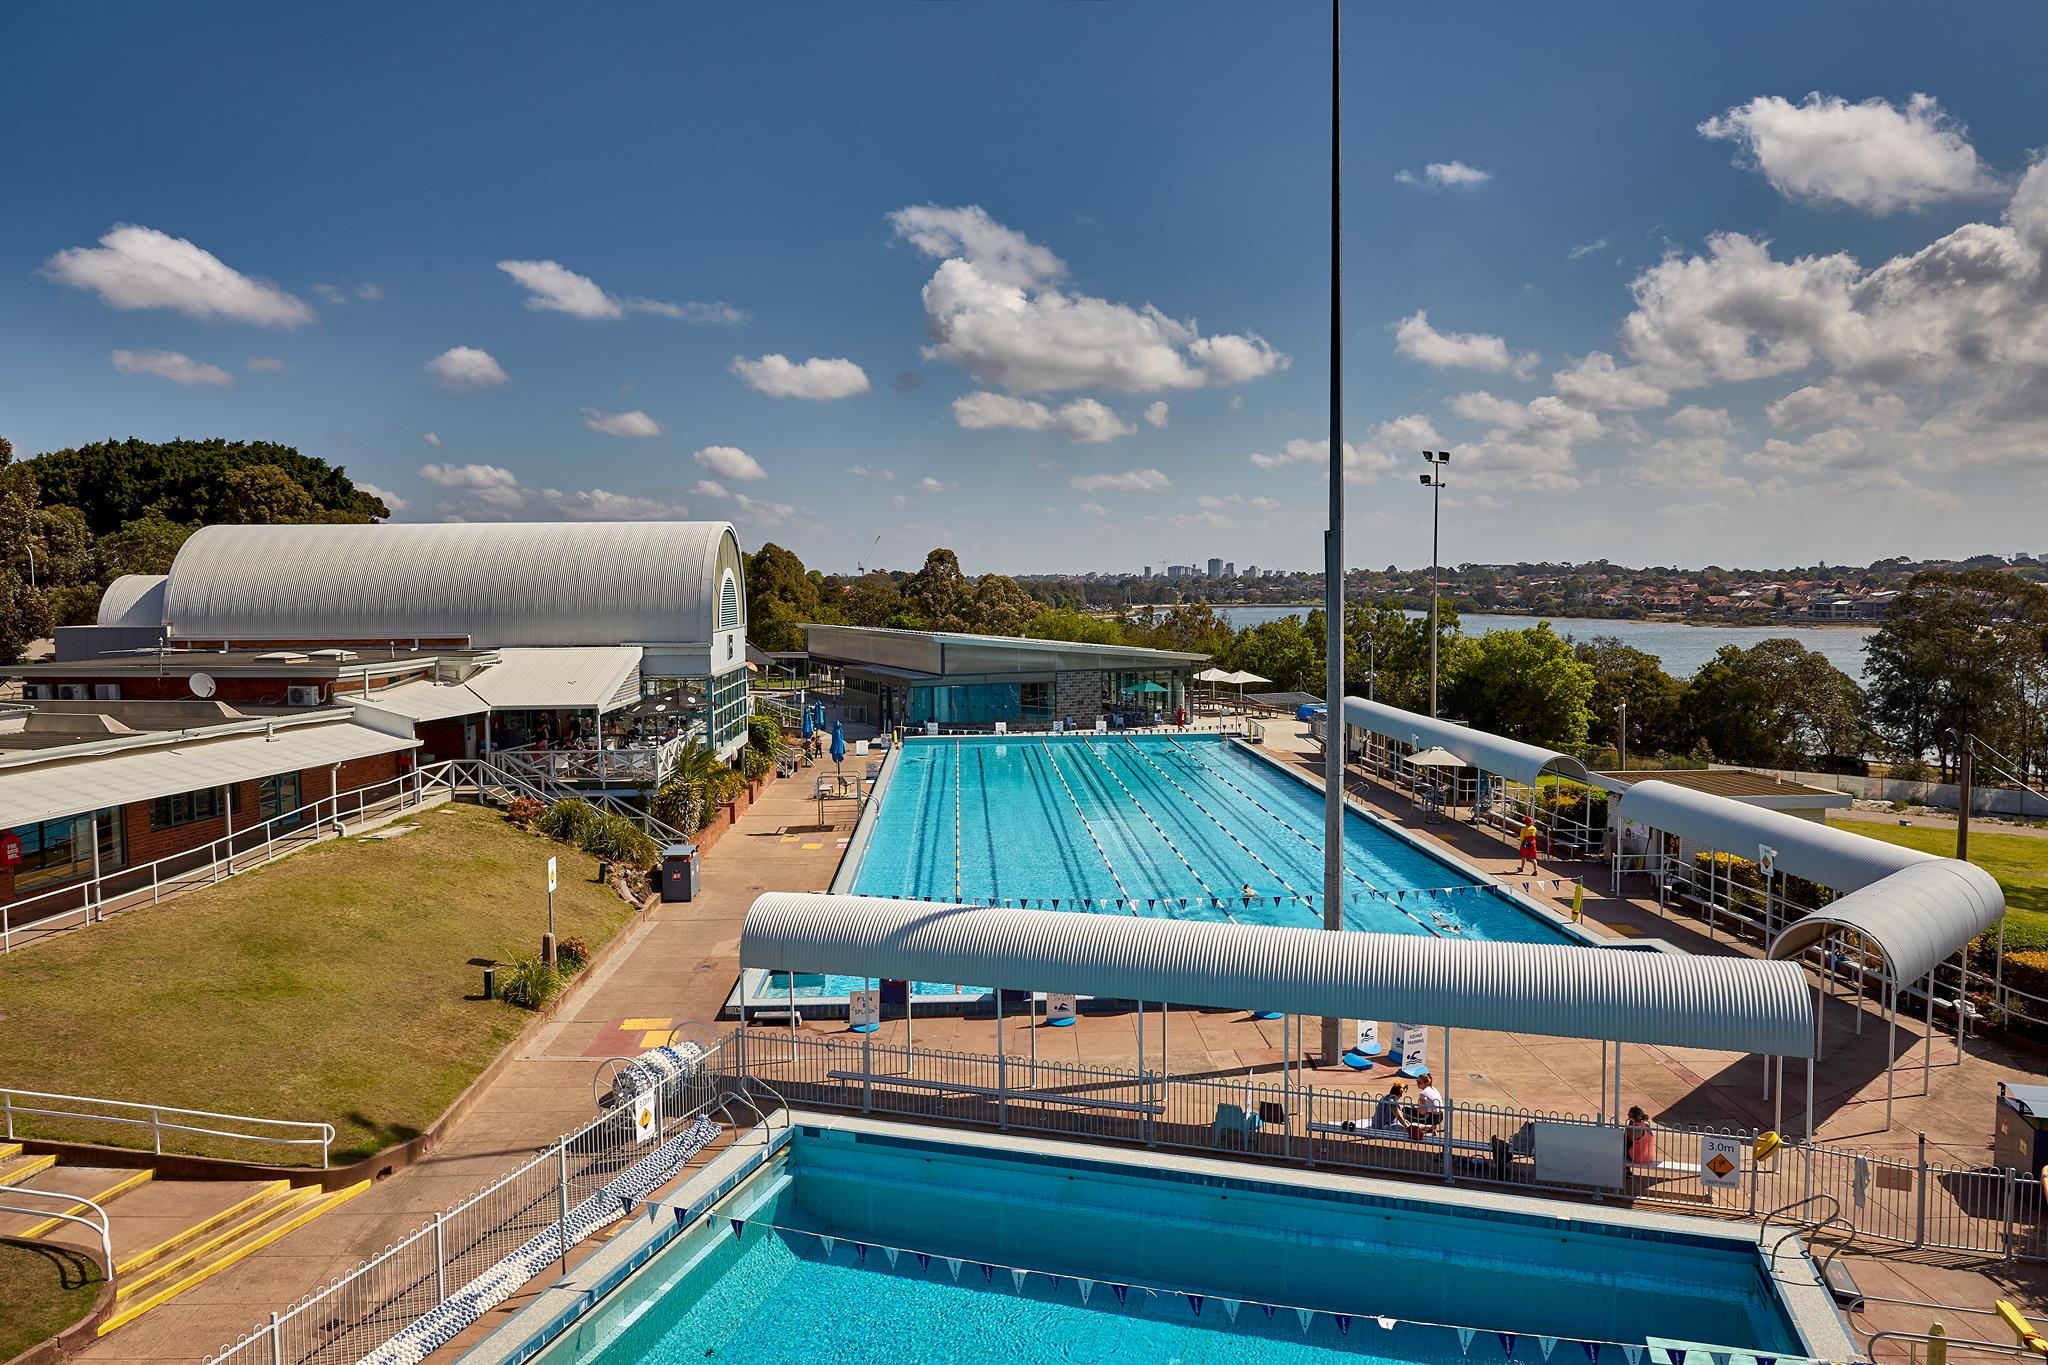 Swimming pools and aquatic centres Sydney - City of Sydney